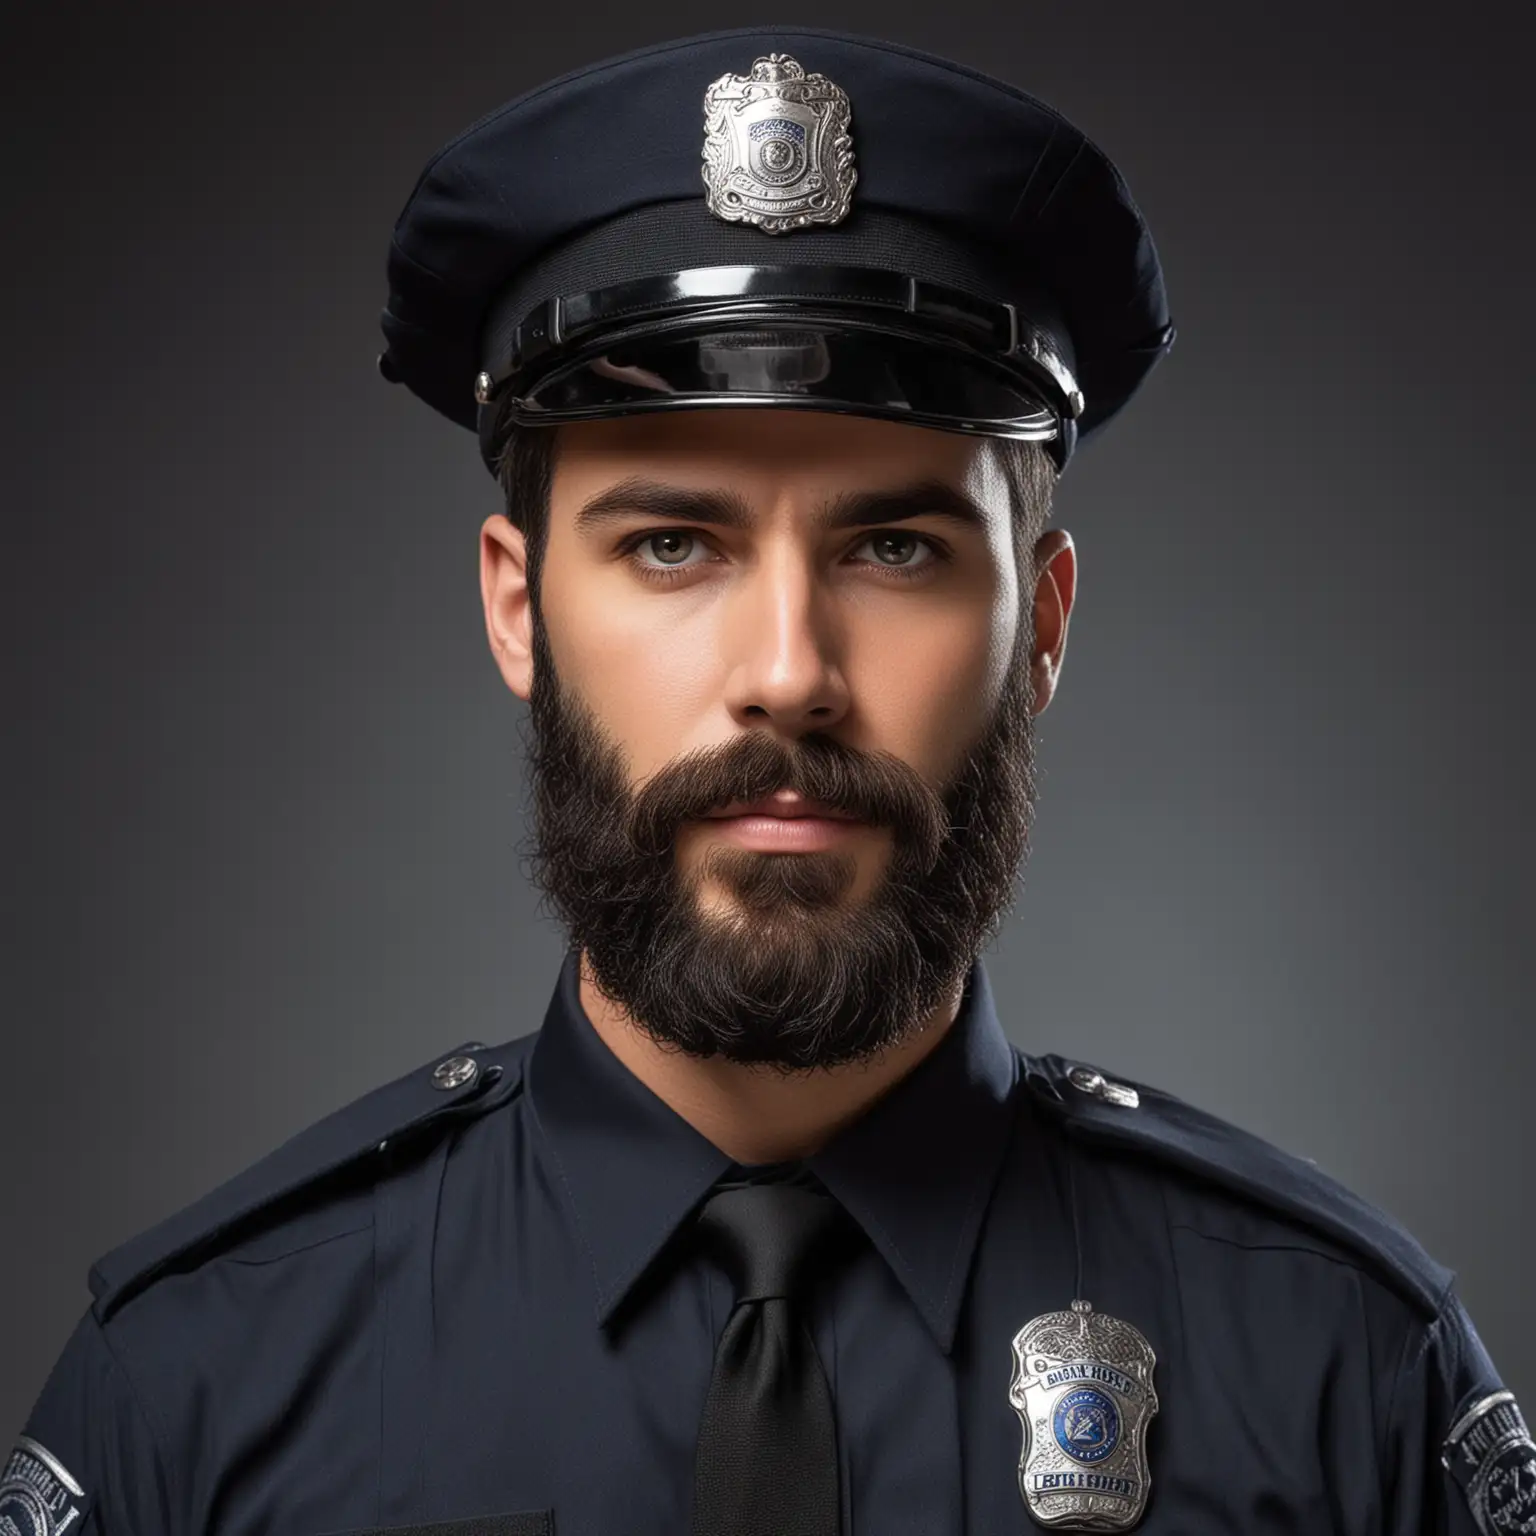 Stylish Policeman with a Majestic Dark Beard